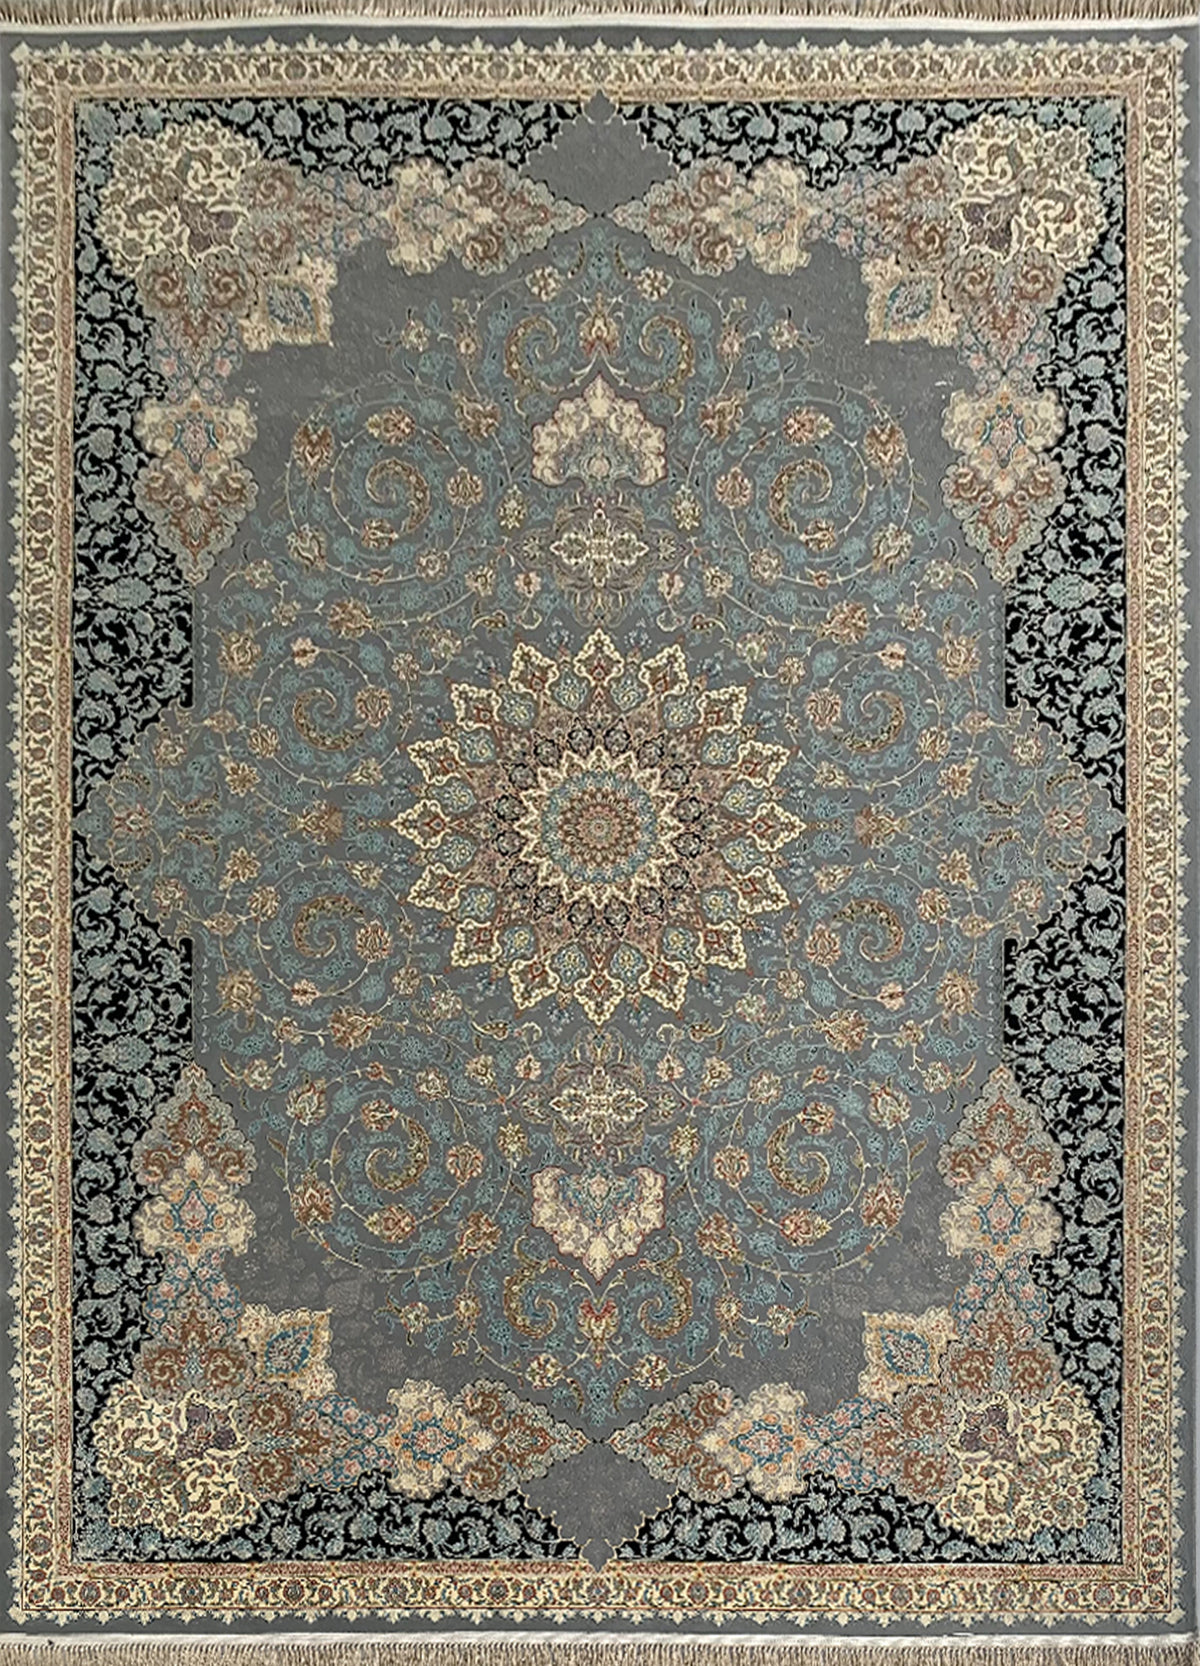 Rugslane Irani Grey Color Traditional Design High Quality Super Premium Silk Carpet 8.3ft X 11.6 ft